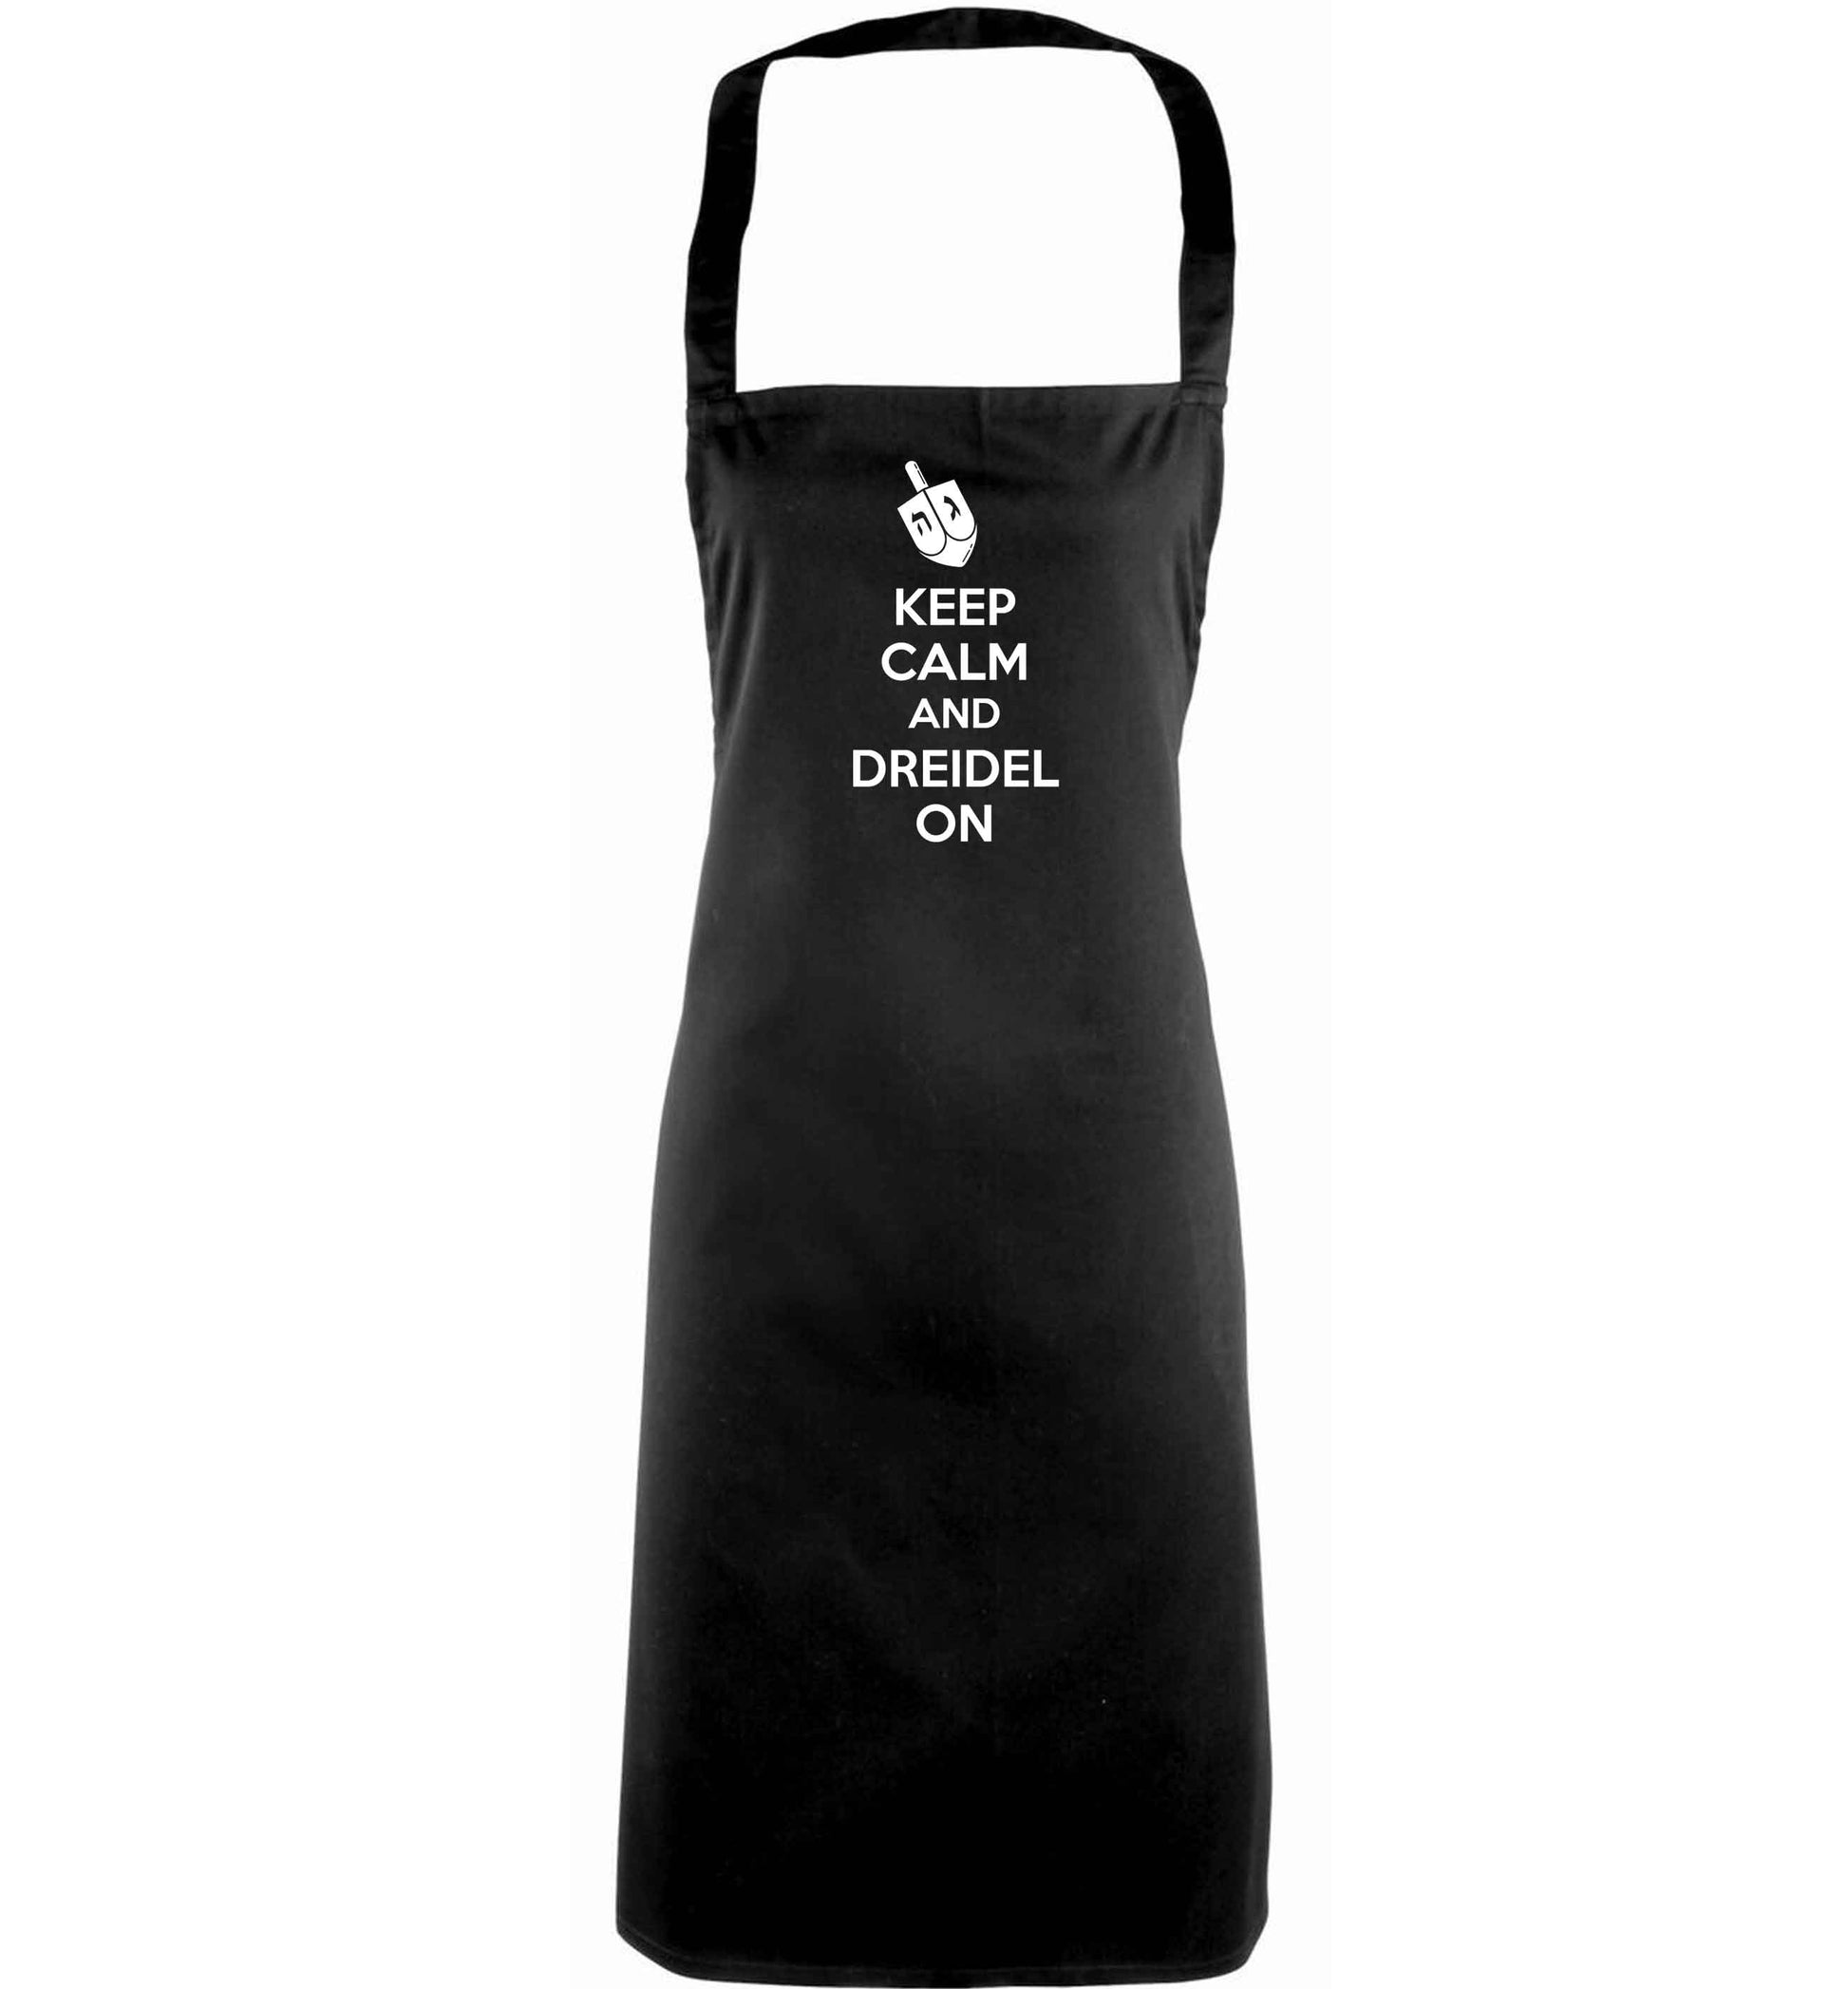 Keep calm and dreidel on adults black apron